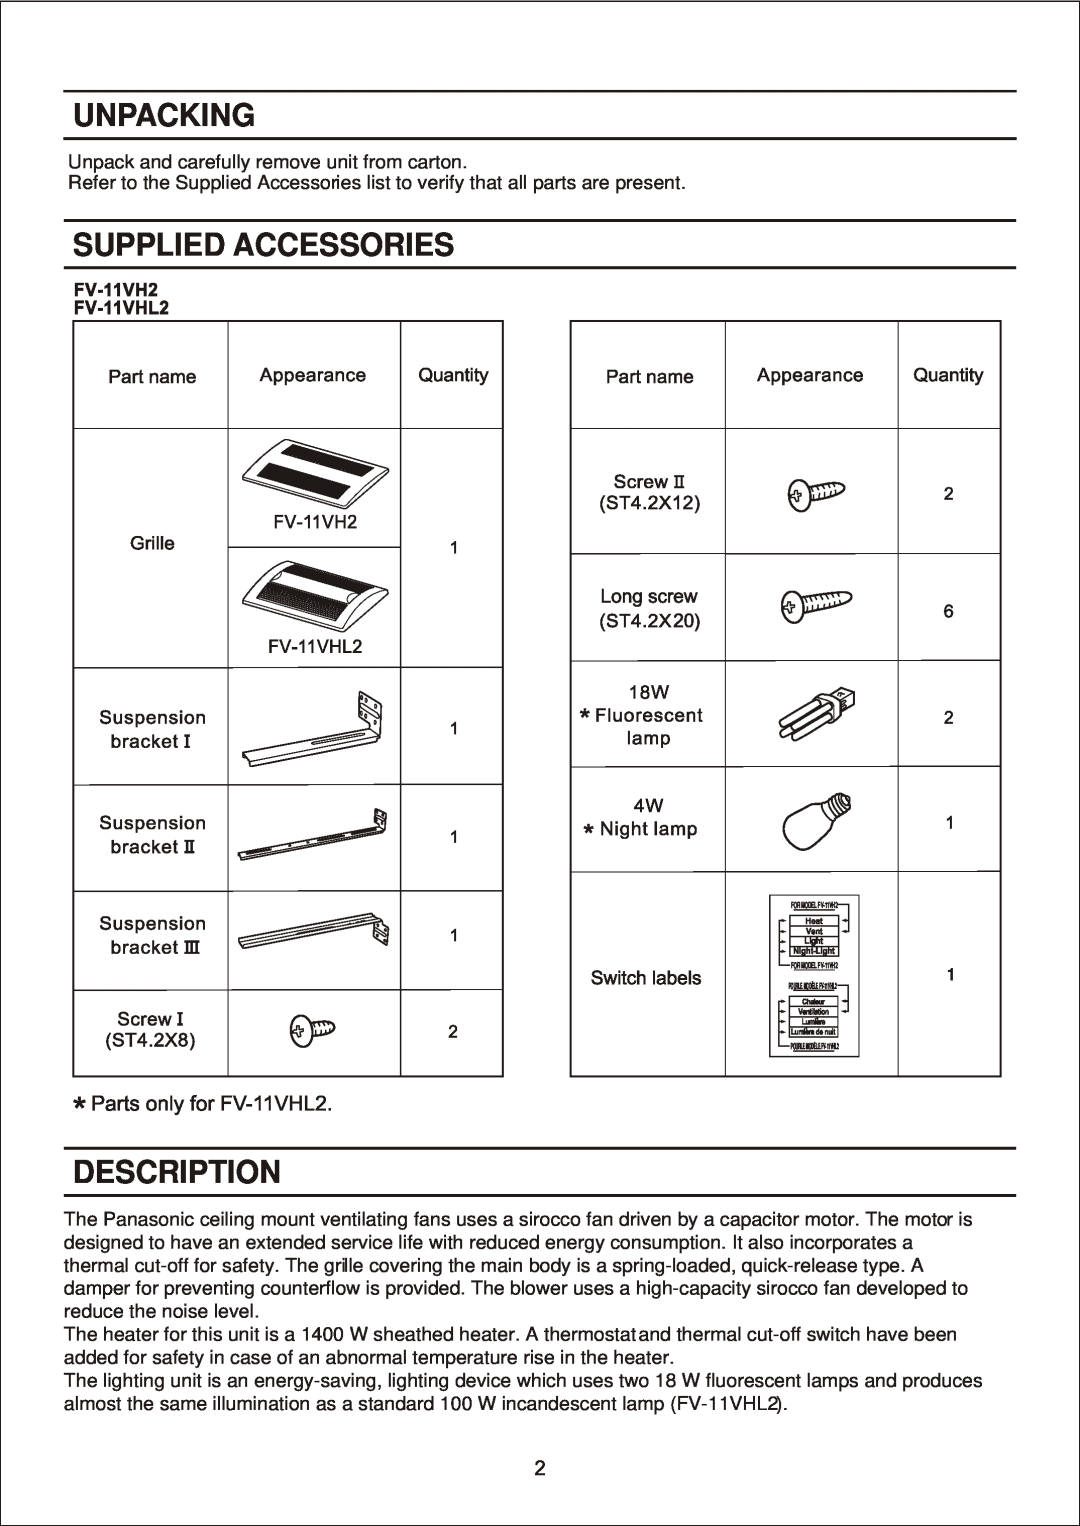 Panasonic FV-11VH2, FV-11VHL2 manual Unpacking, Supplied Accessories, Description 